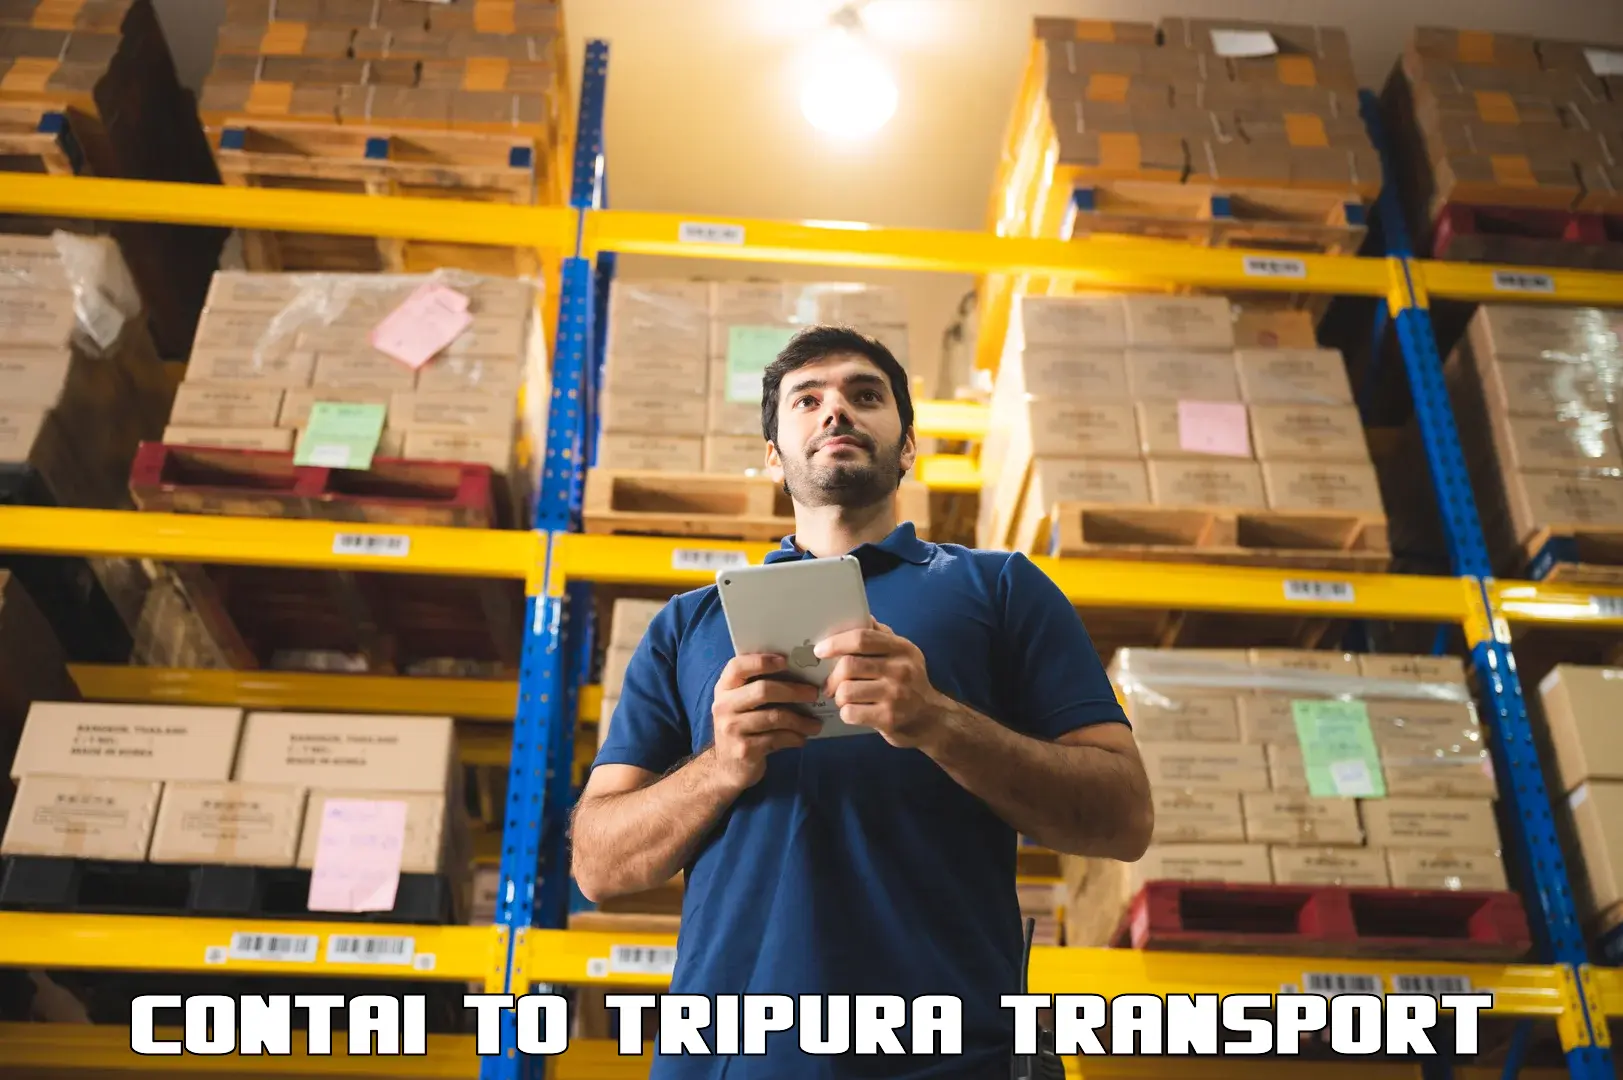 Furniture transport service Contai to Tripura